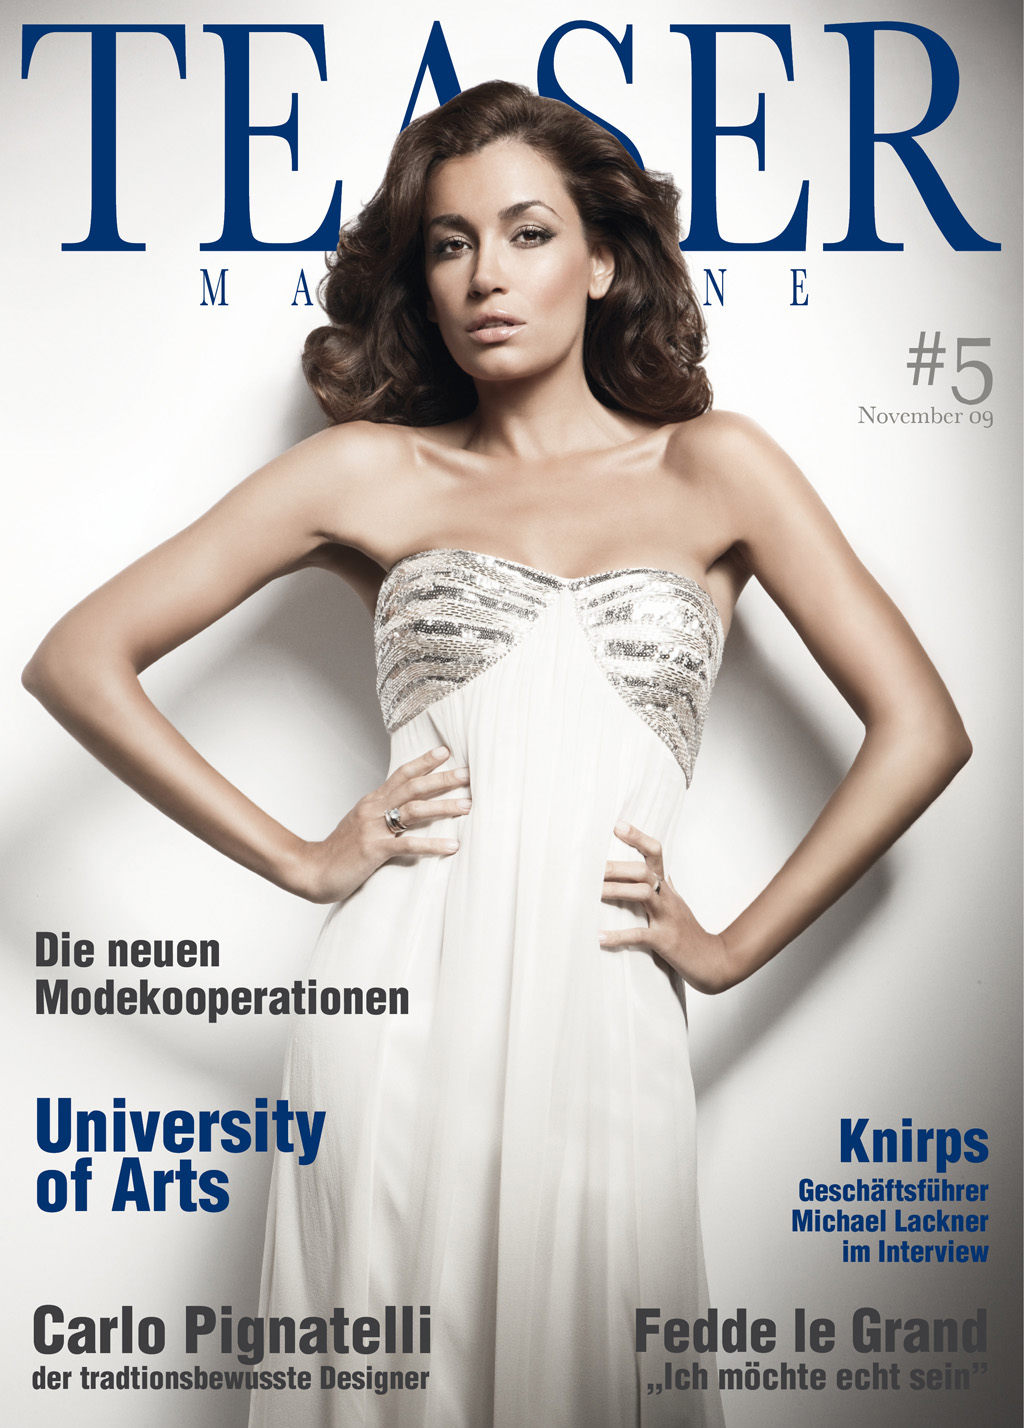 Teaser online fashion magazine #5 -  Covermodel: Jana Ina c/o Louisa Models | Freie-Pressemitteilungen.de